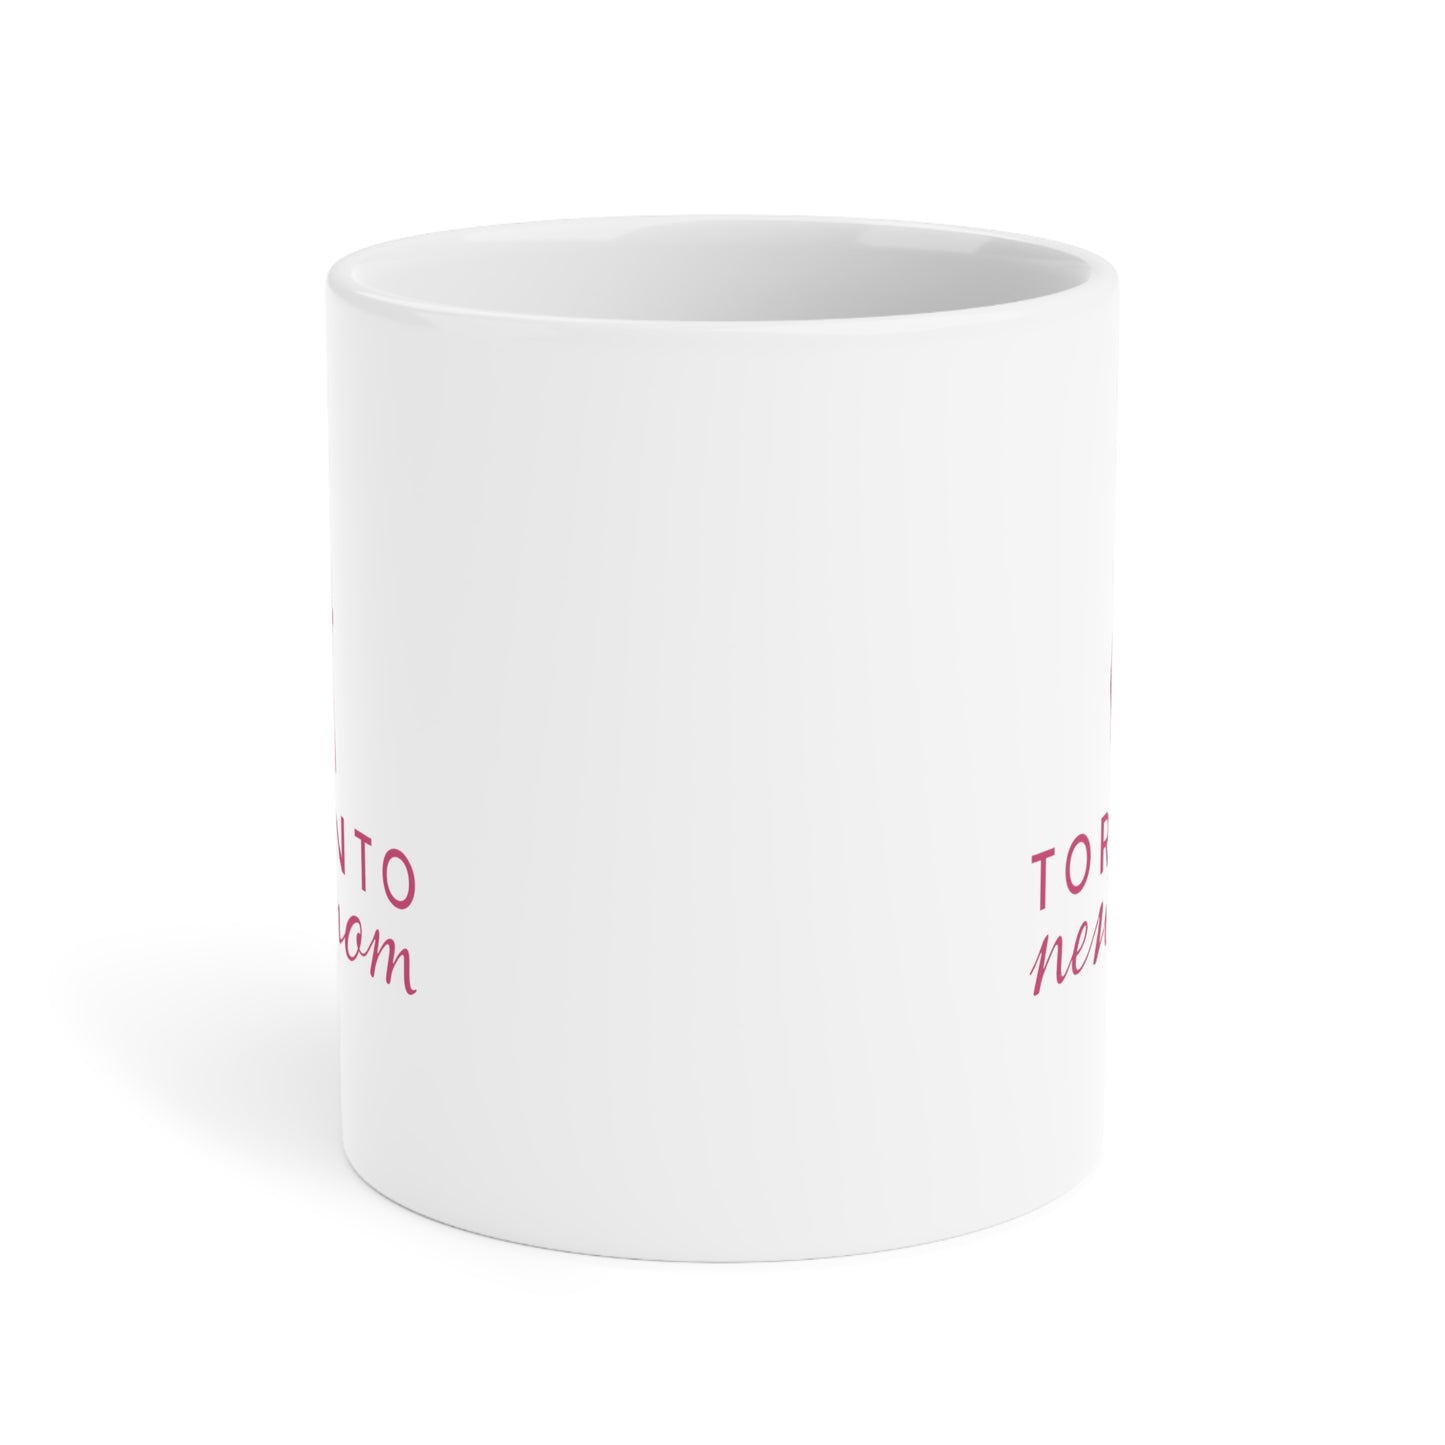 Ceramic Mug- Toronto New Mom- Pink print on white mug